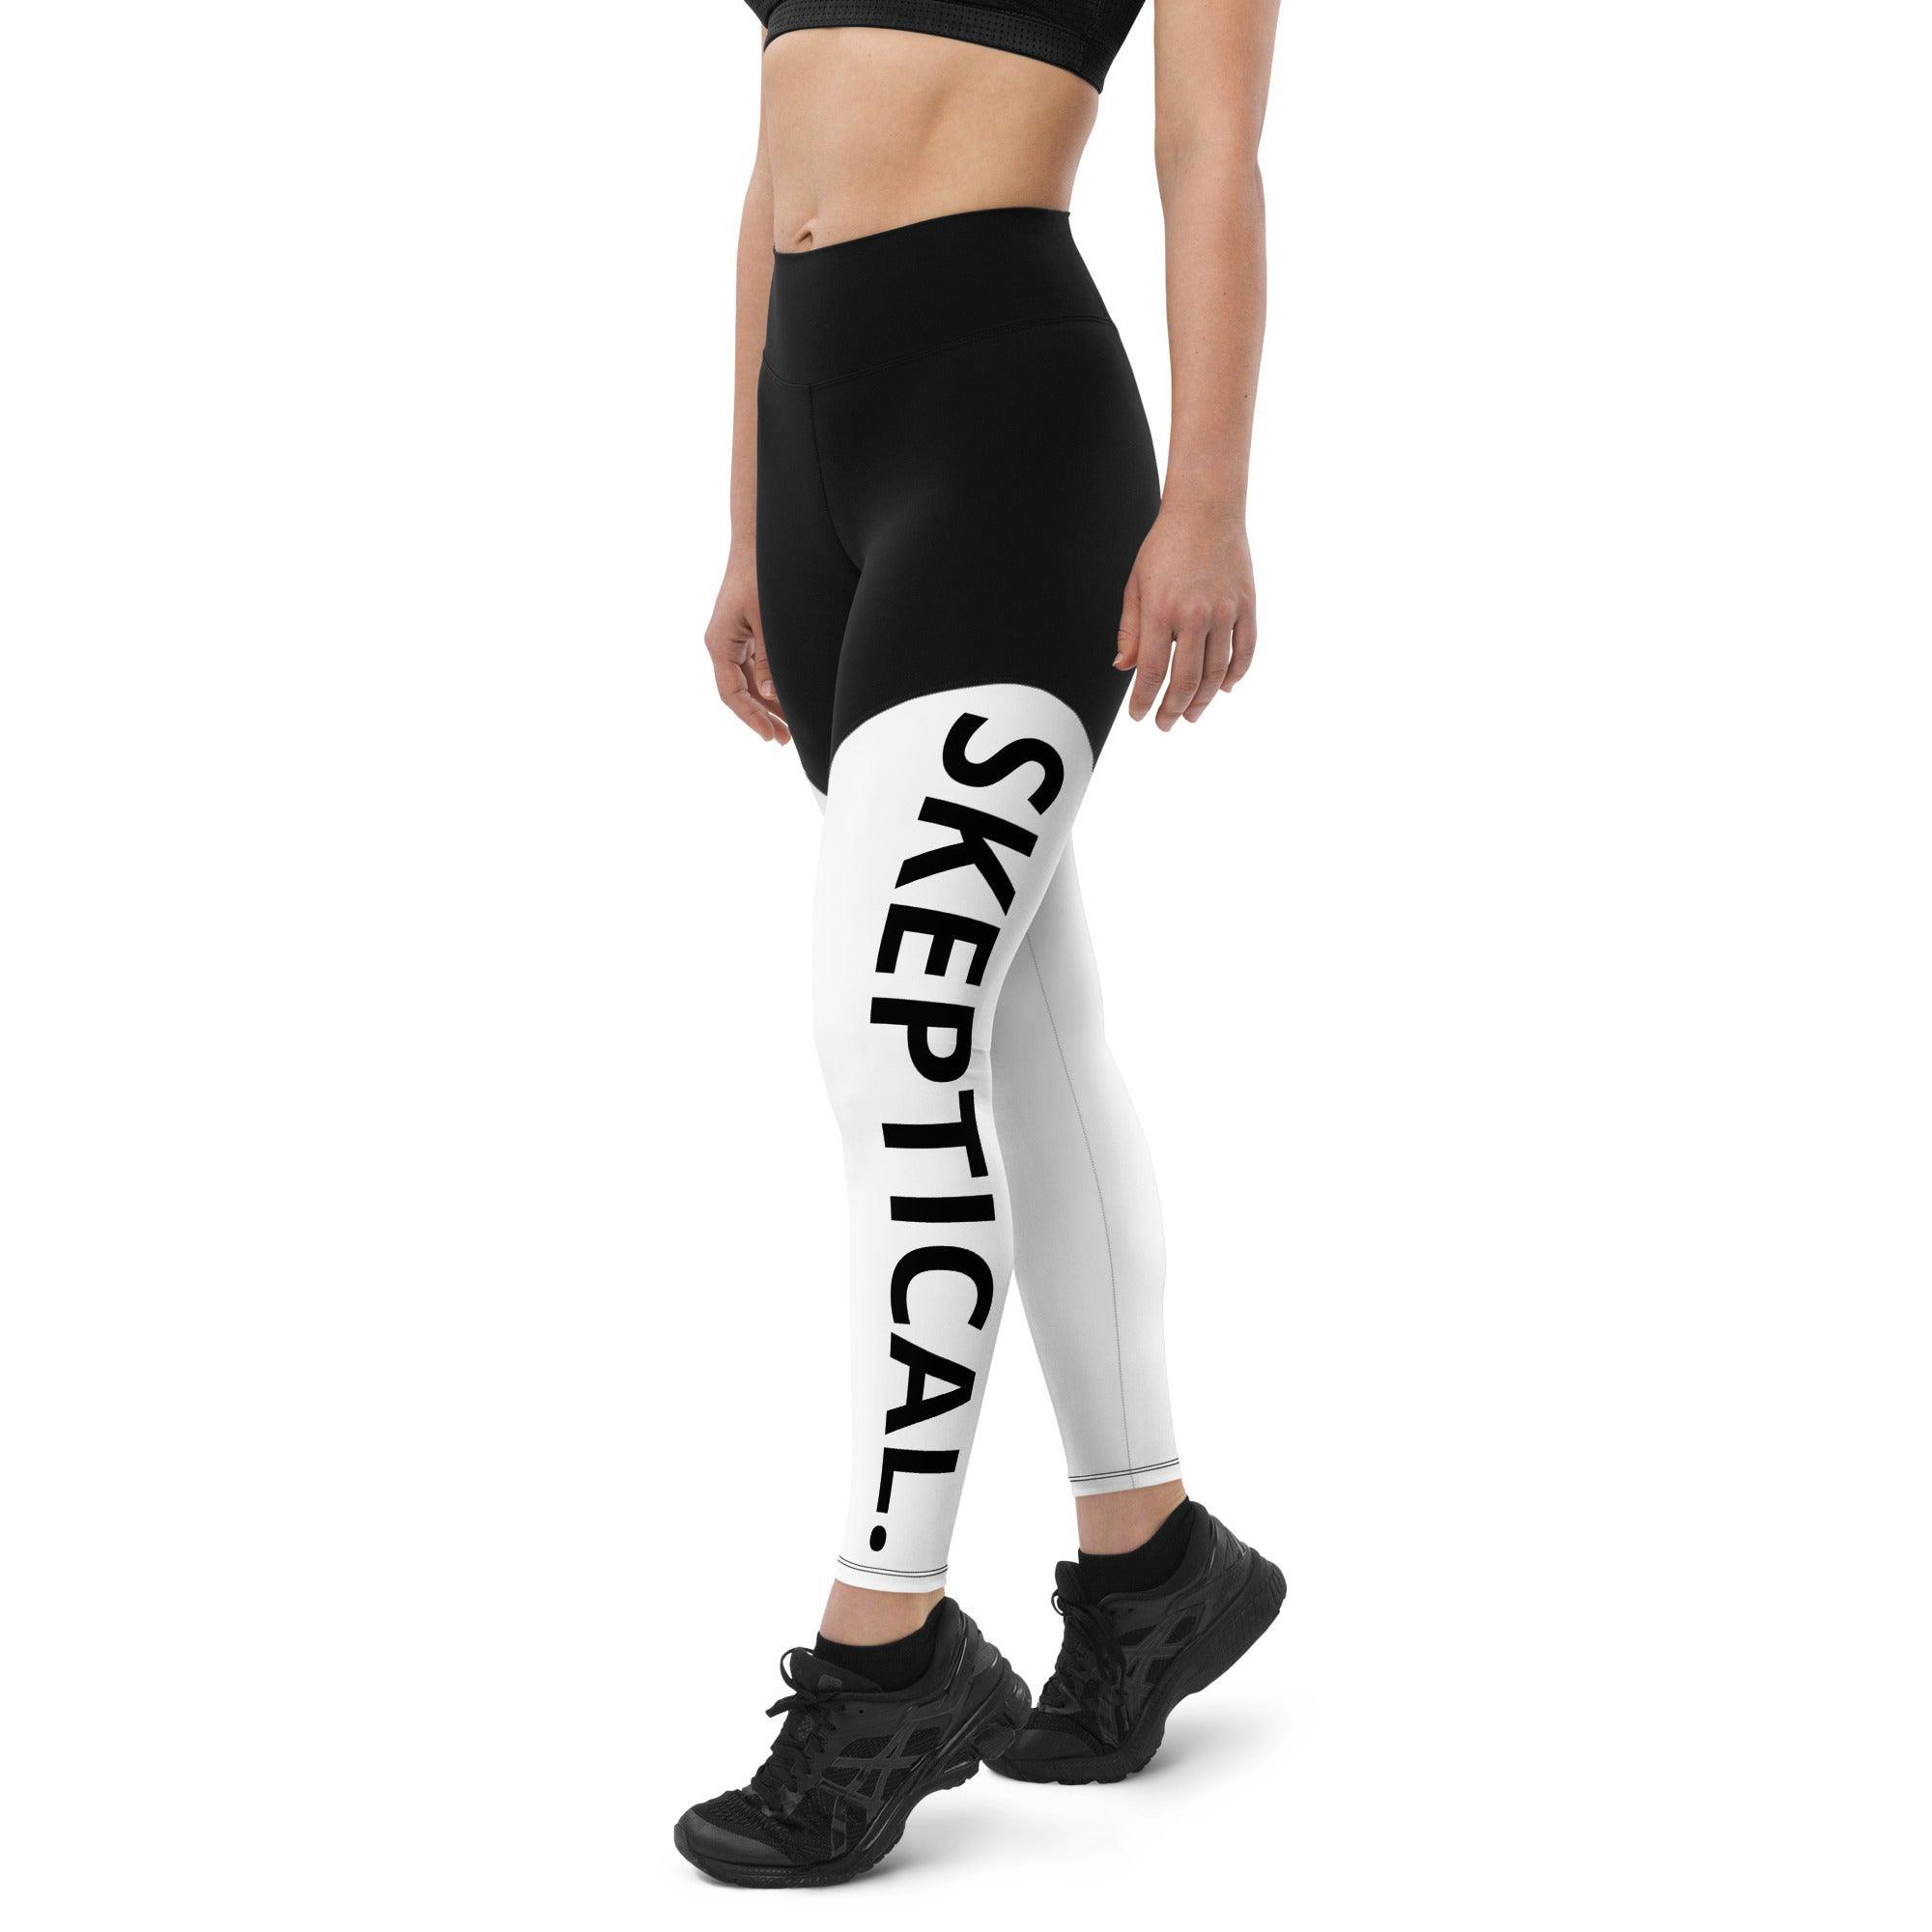 SKEPTICAL. Black And White Sports Leggings